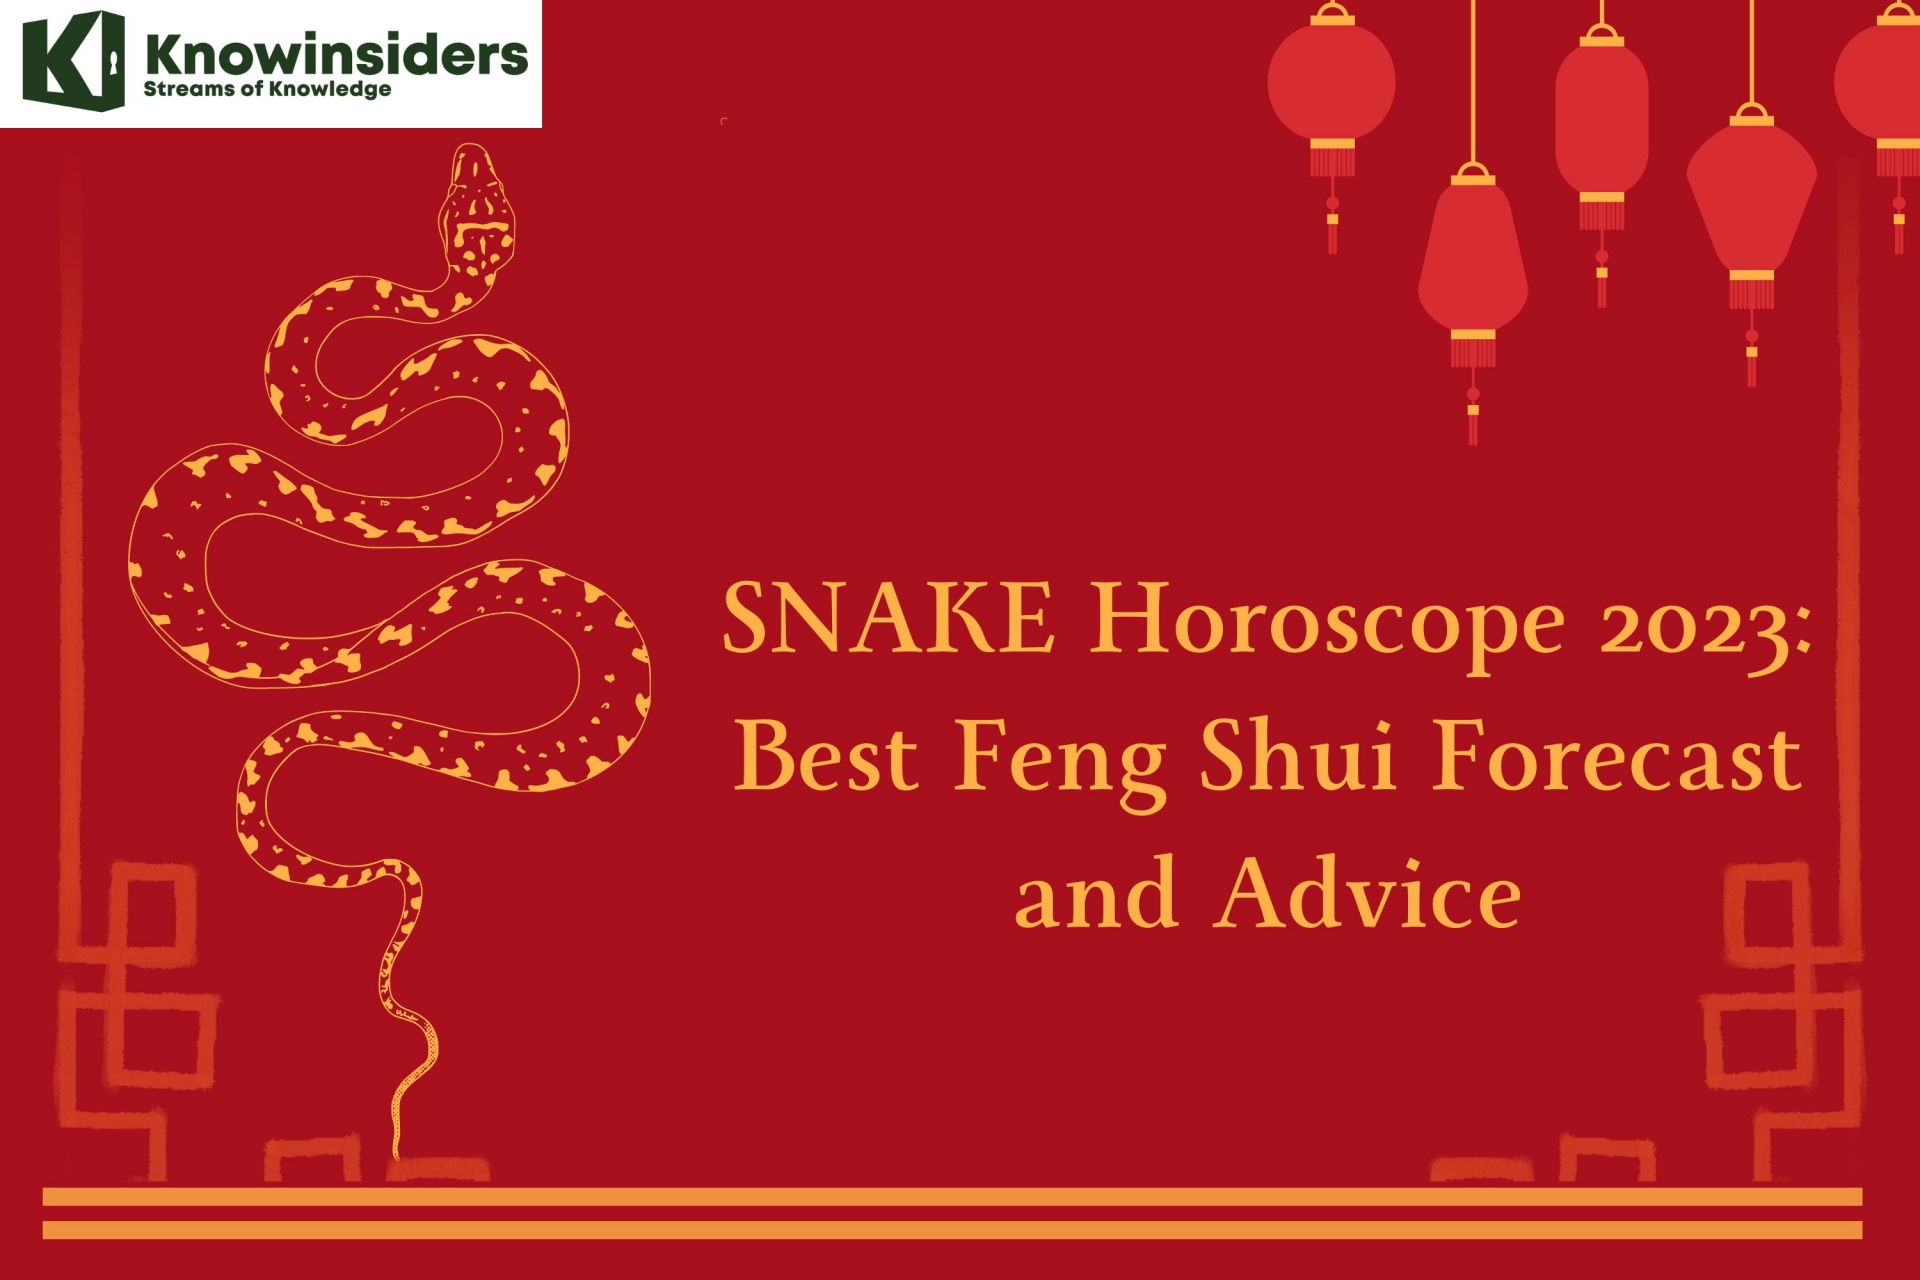 SNAKE Horoscope 2023: Best Feng Shui Forecast and Advice